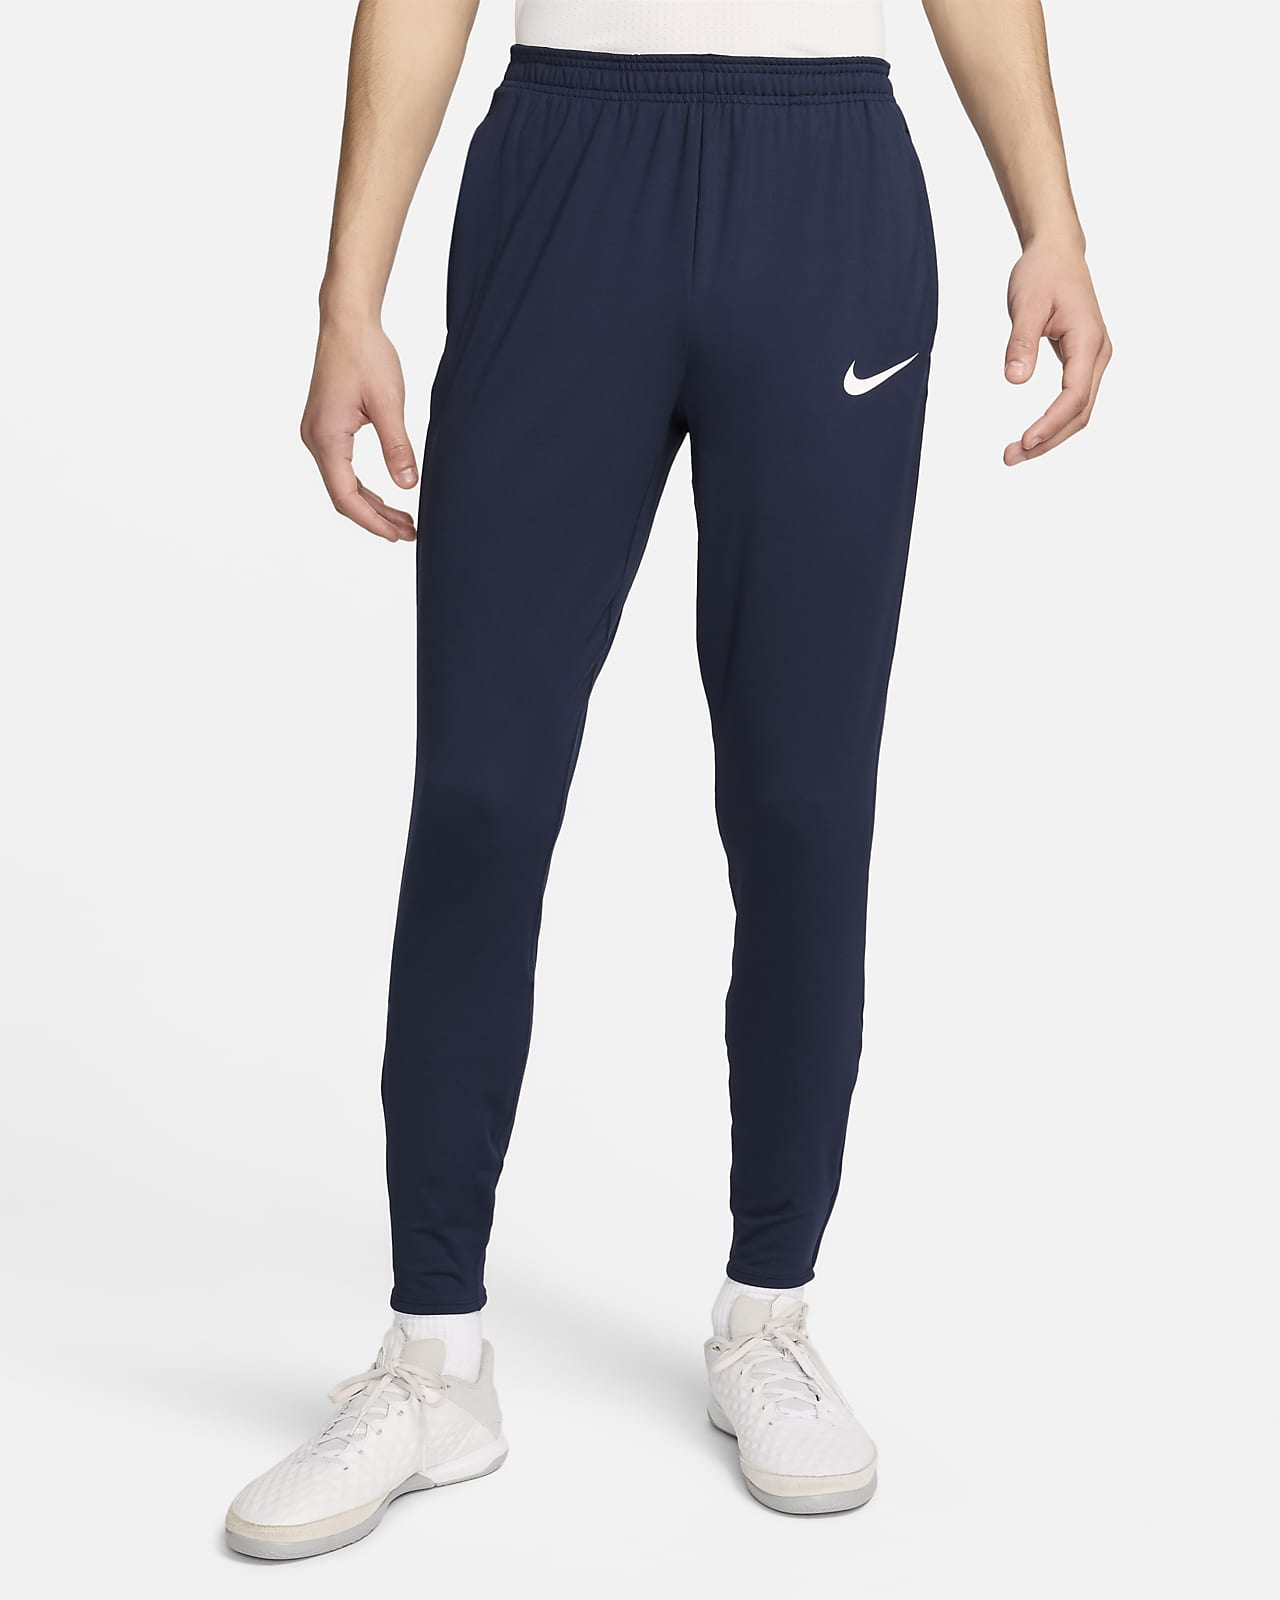 Pantaloni da calcio Dri-FIT Nike Strike – Uomo